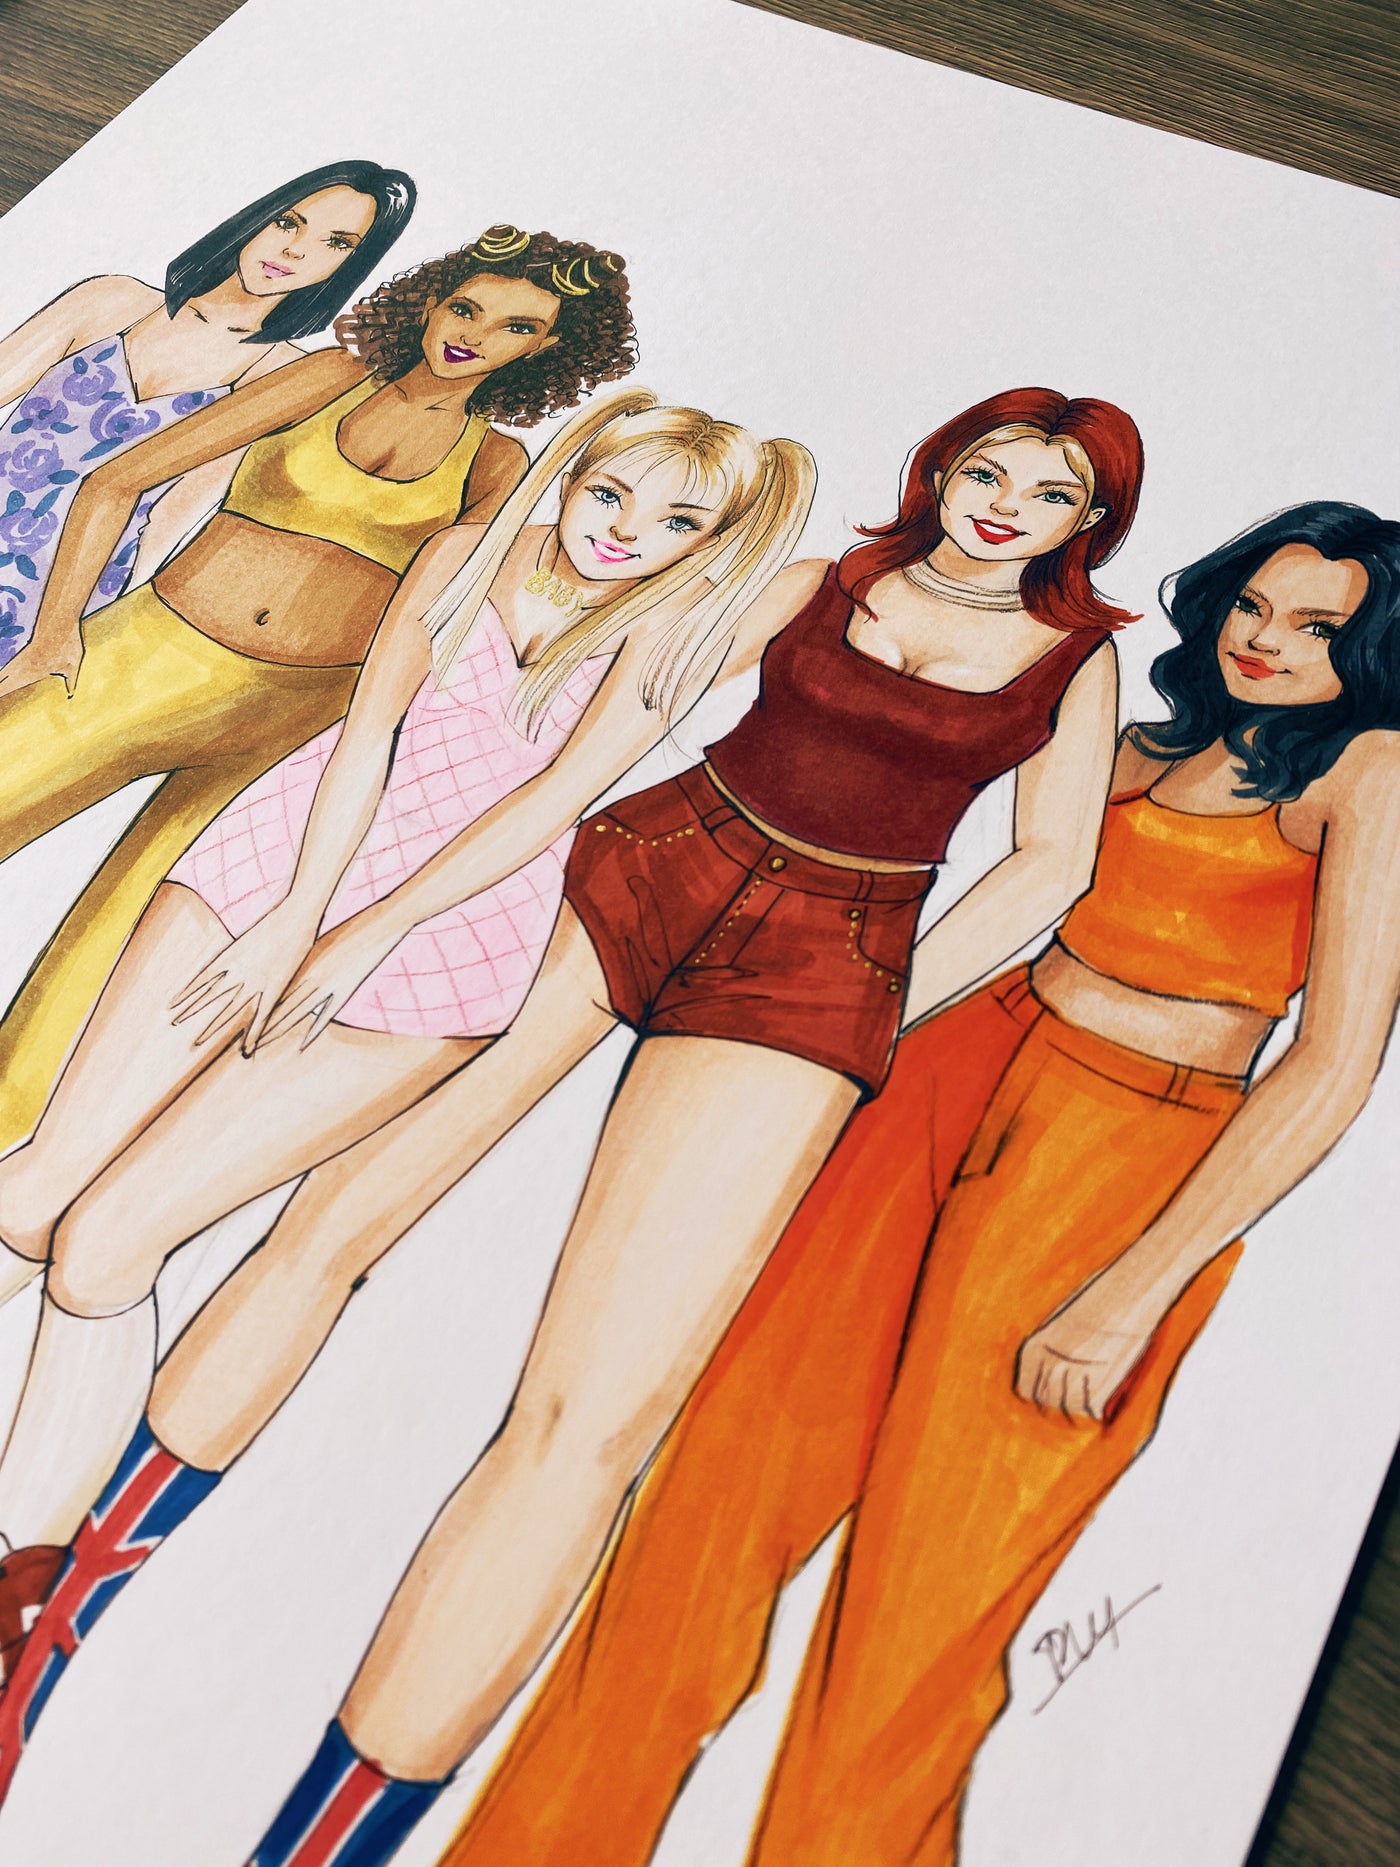 Spice Girls Original Art